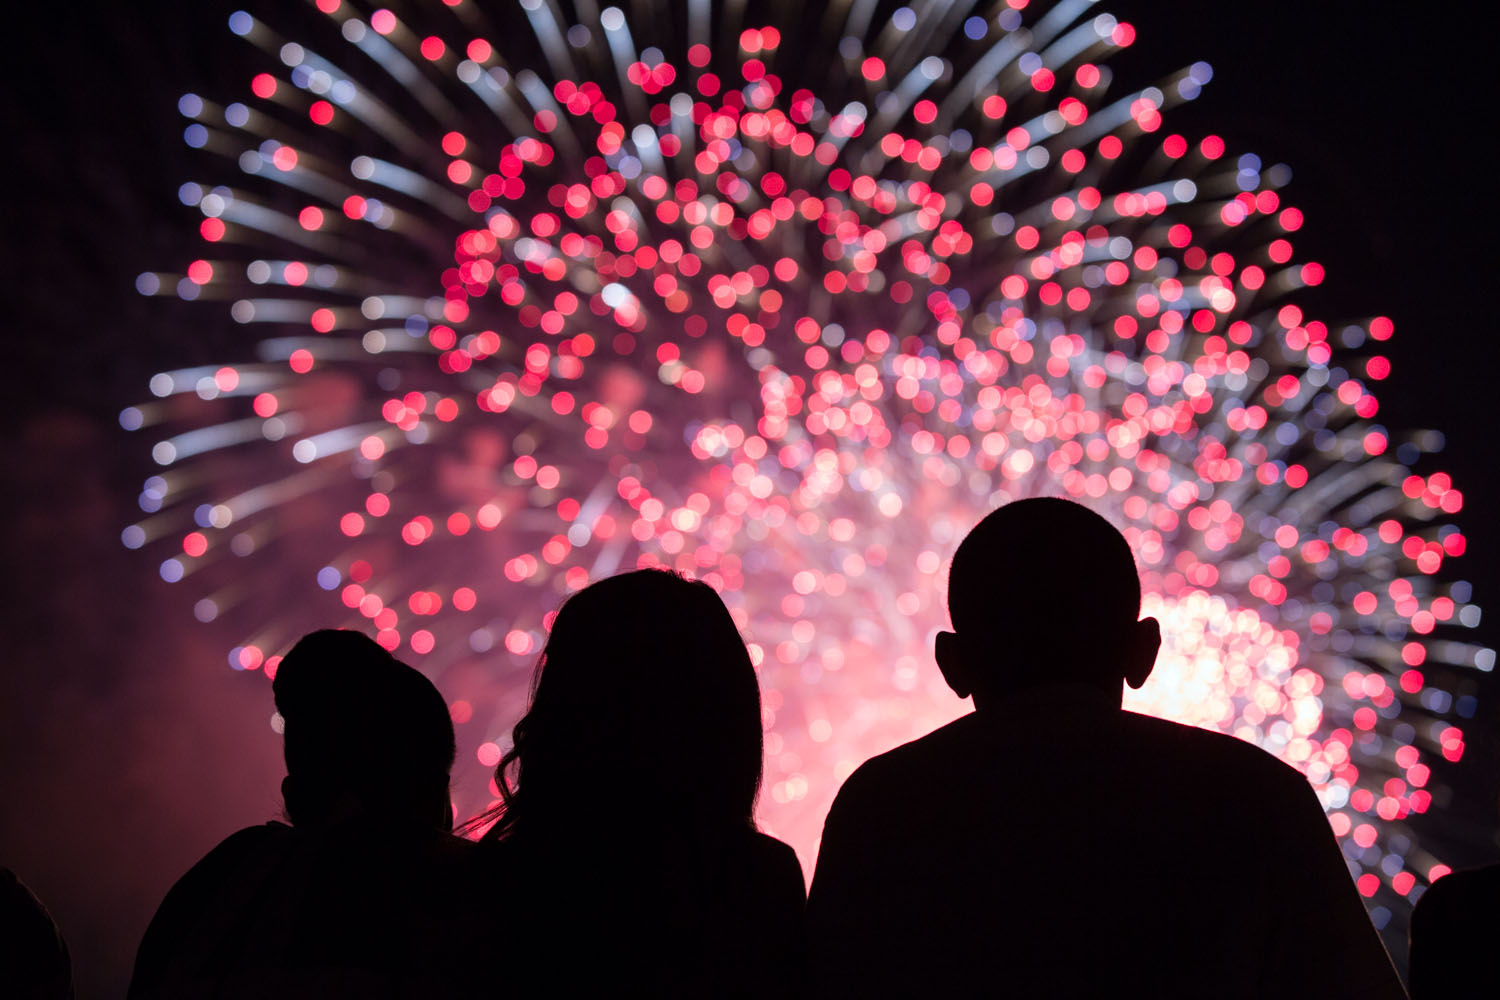 First Lady Michelle Obama, Malia Obama and President Barack Obama watch the Fourth of July fireworks